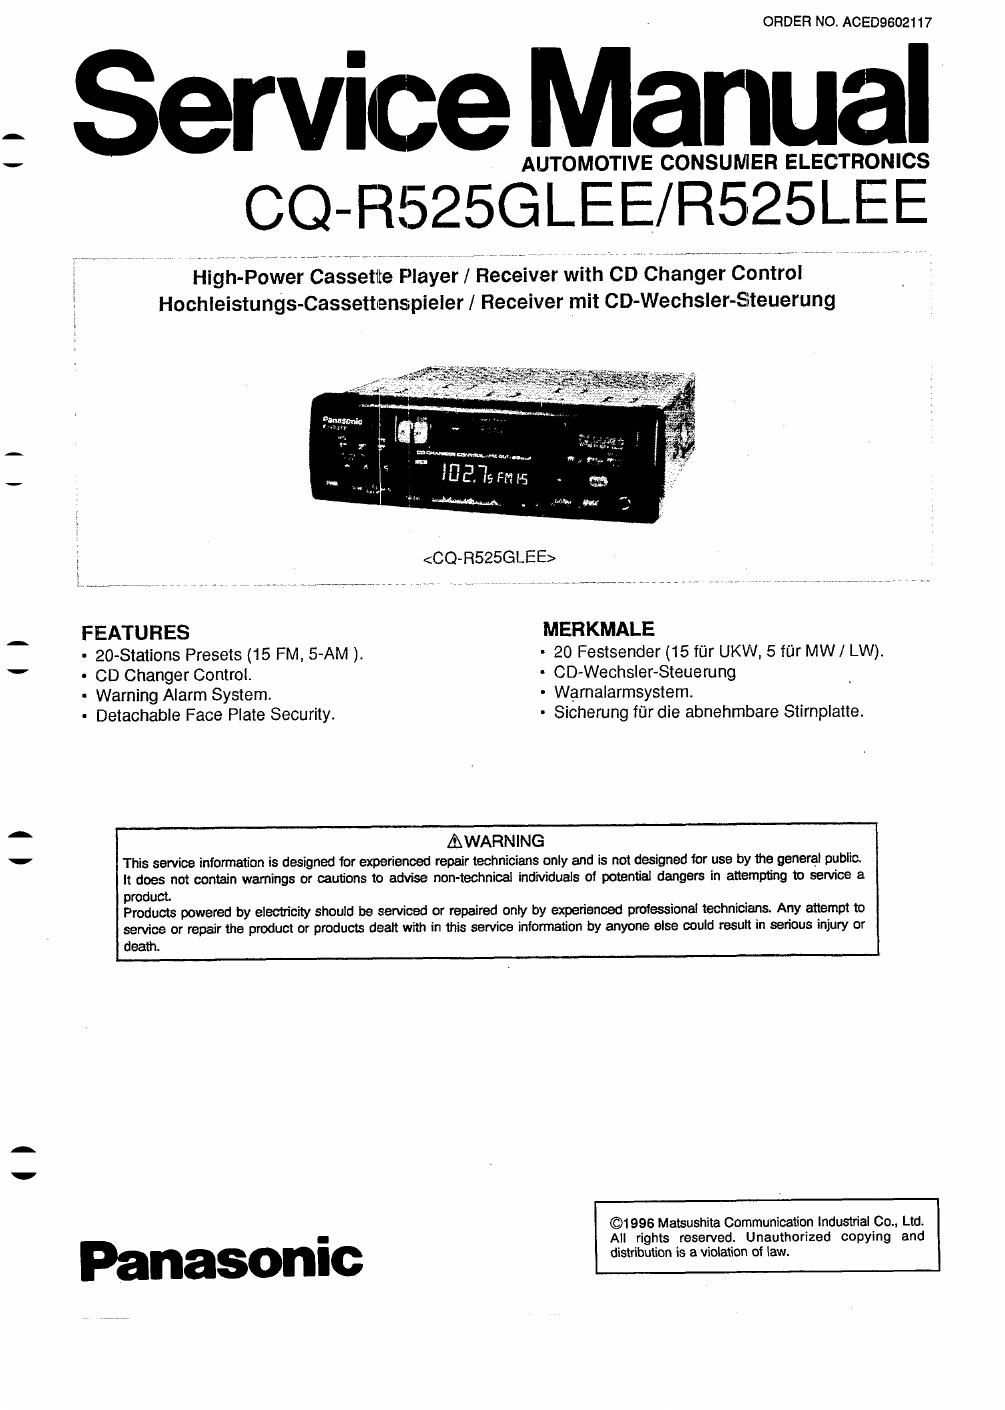 panasonic cq r 525 glee service manual